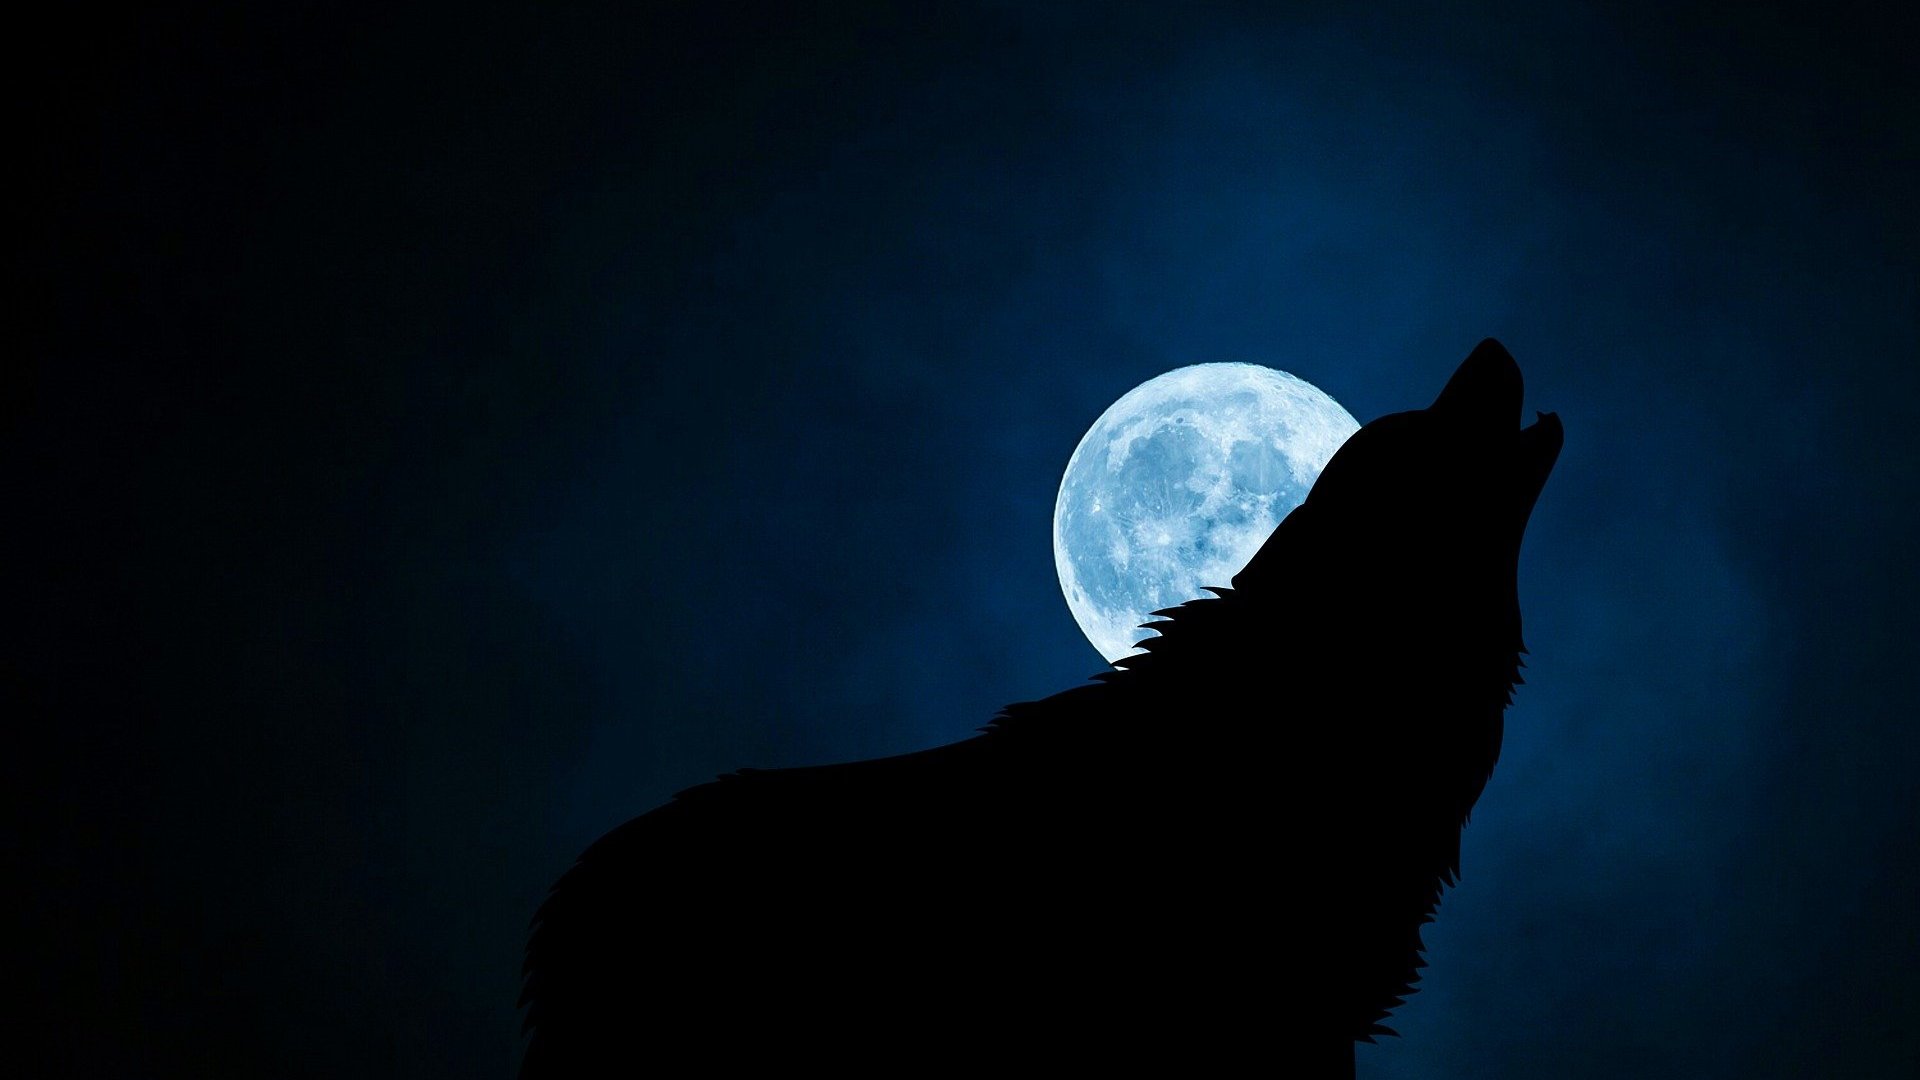 Loup-Garou grandeur nature, le jeu de nuit — LaToileScoute